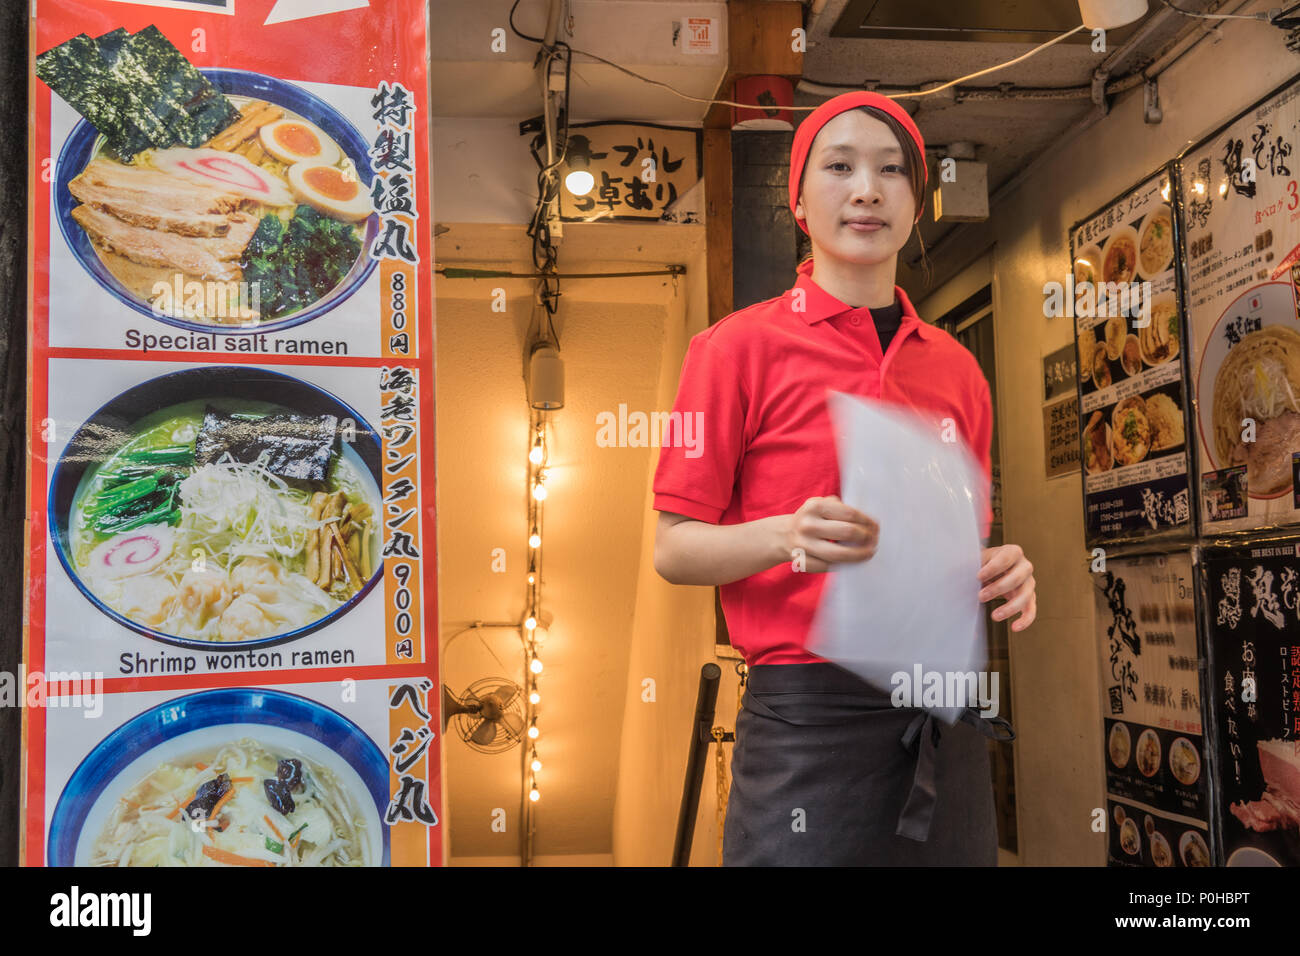 Woman worker at entrance to ramen restaurant, Shibuya, Tokyo, Japan Stock Photo